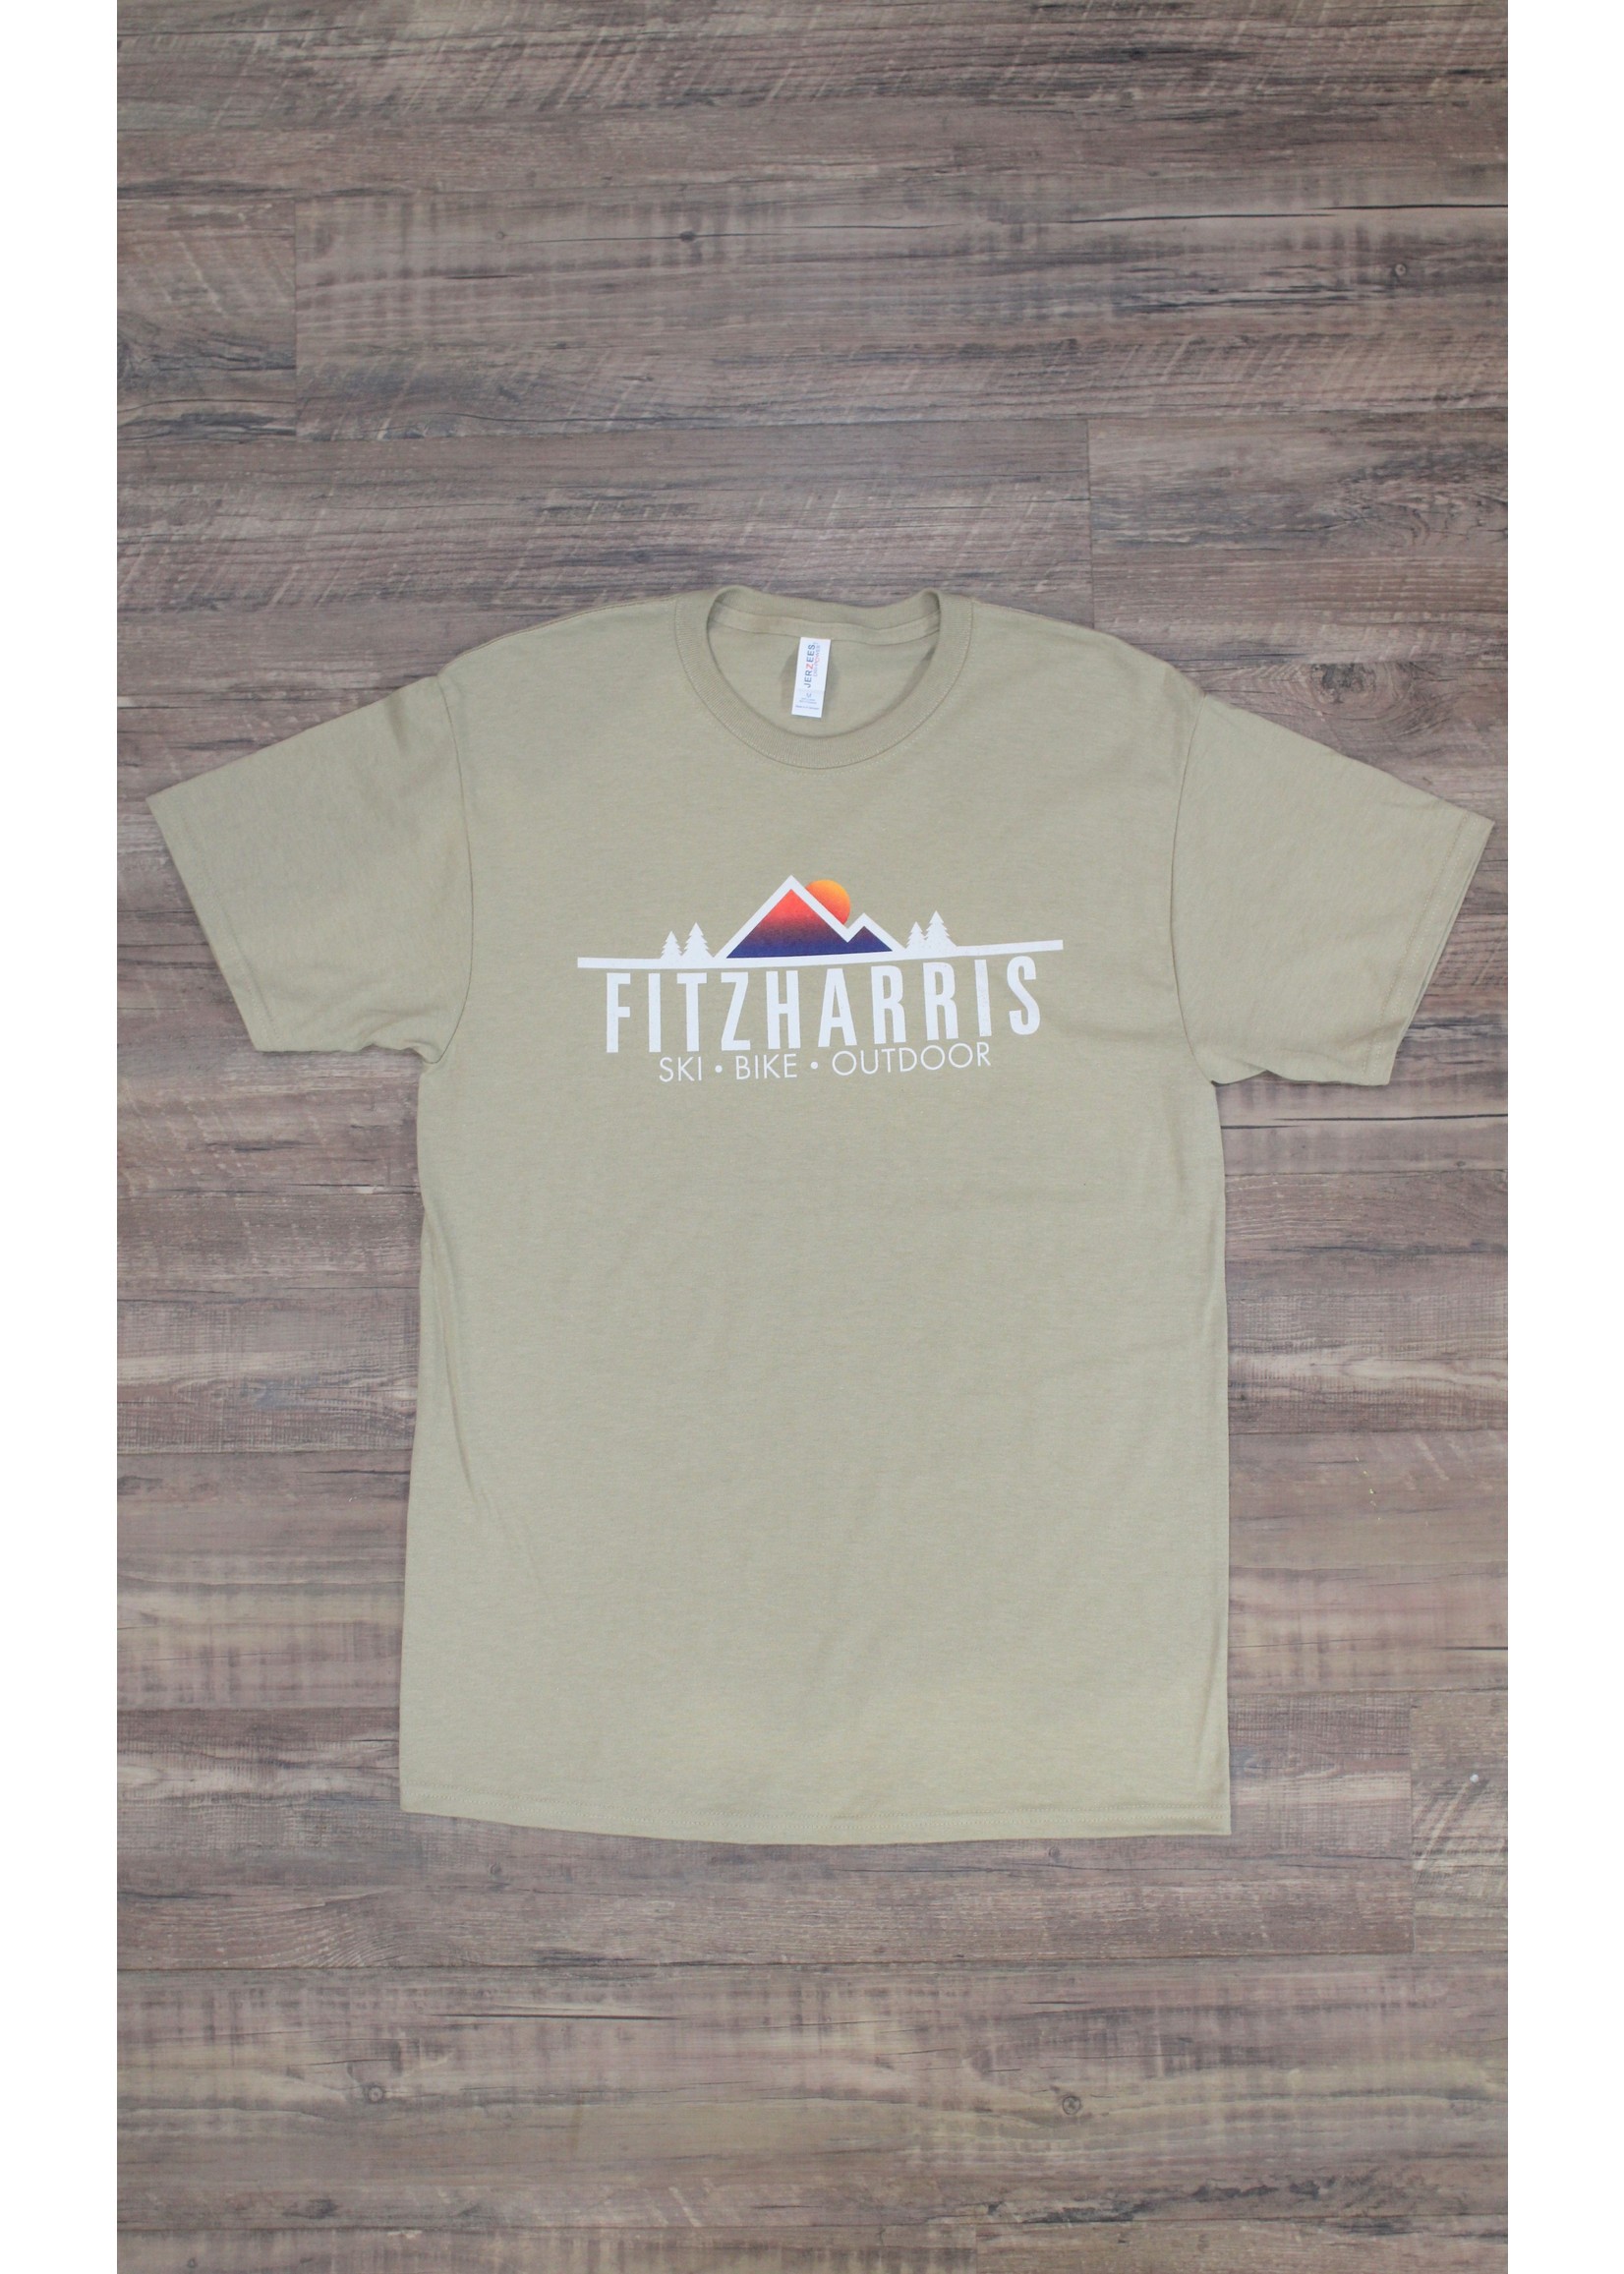 Fitzharris Fitz Logo SS Tee Shirt